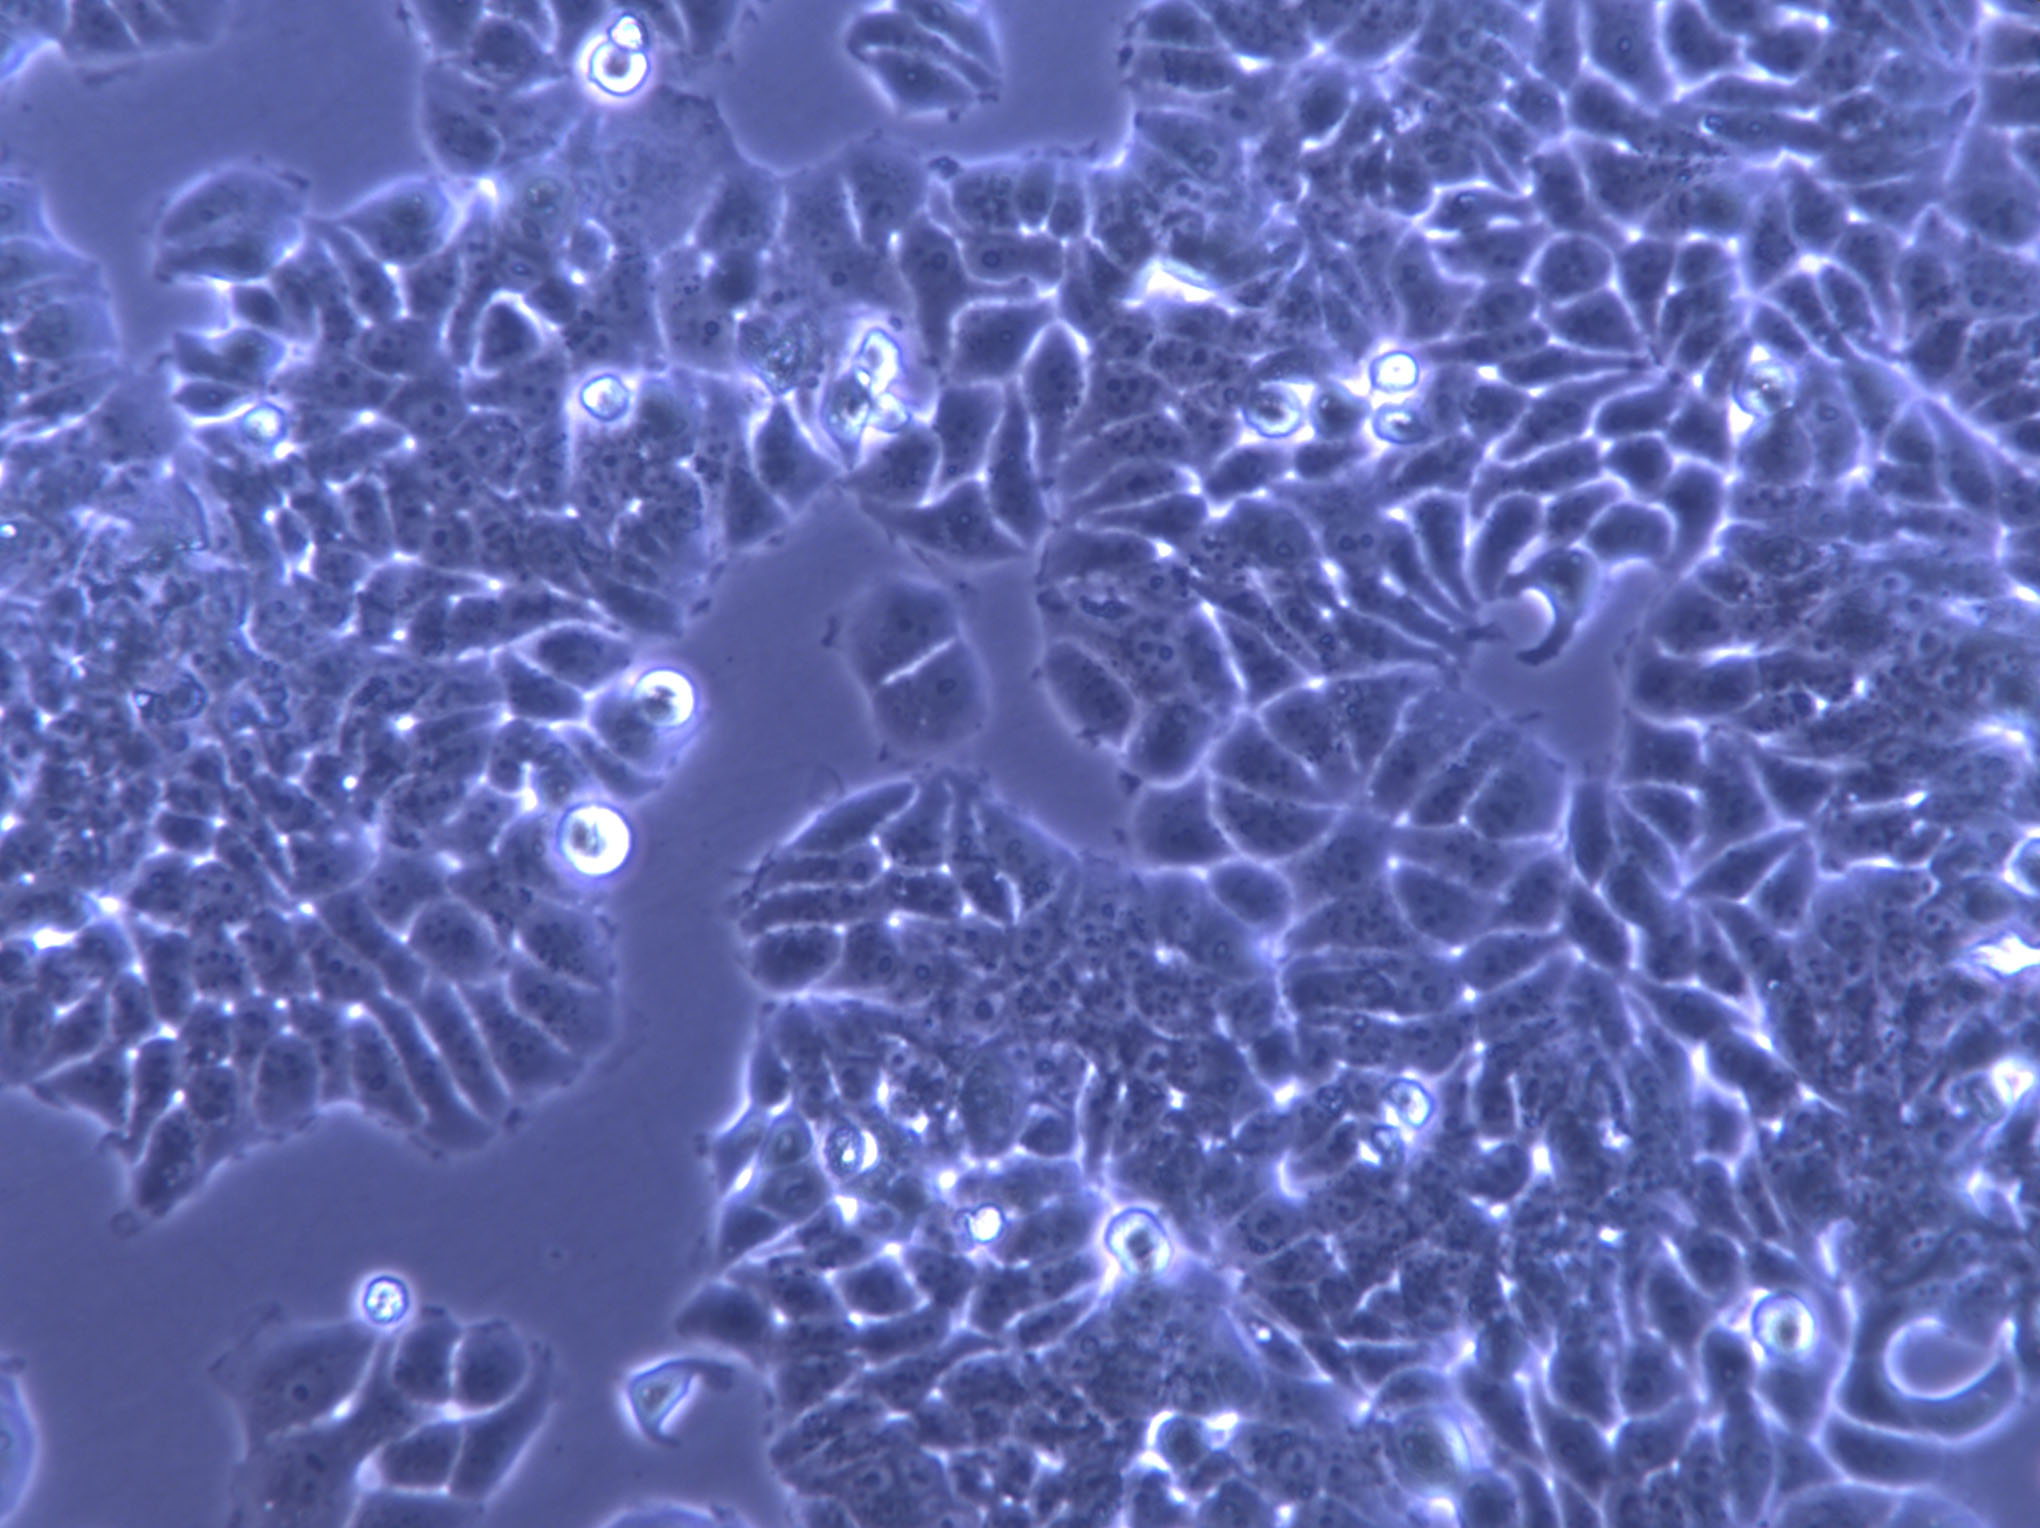 HuLEC-5a Cells|人肺微血管内皮克隆细胞,HuLEC-5a Cells